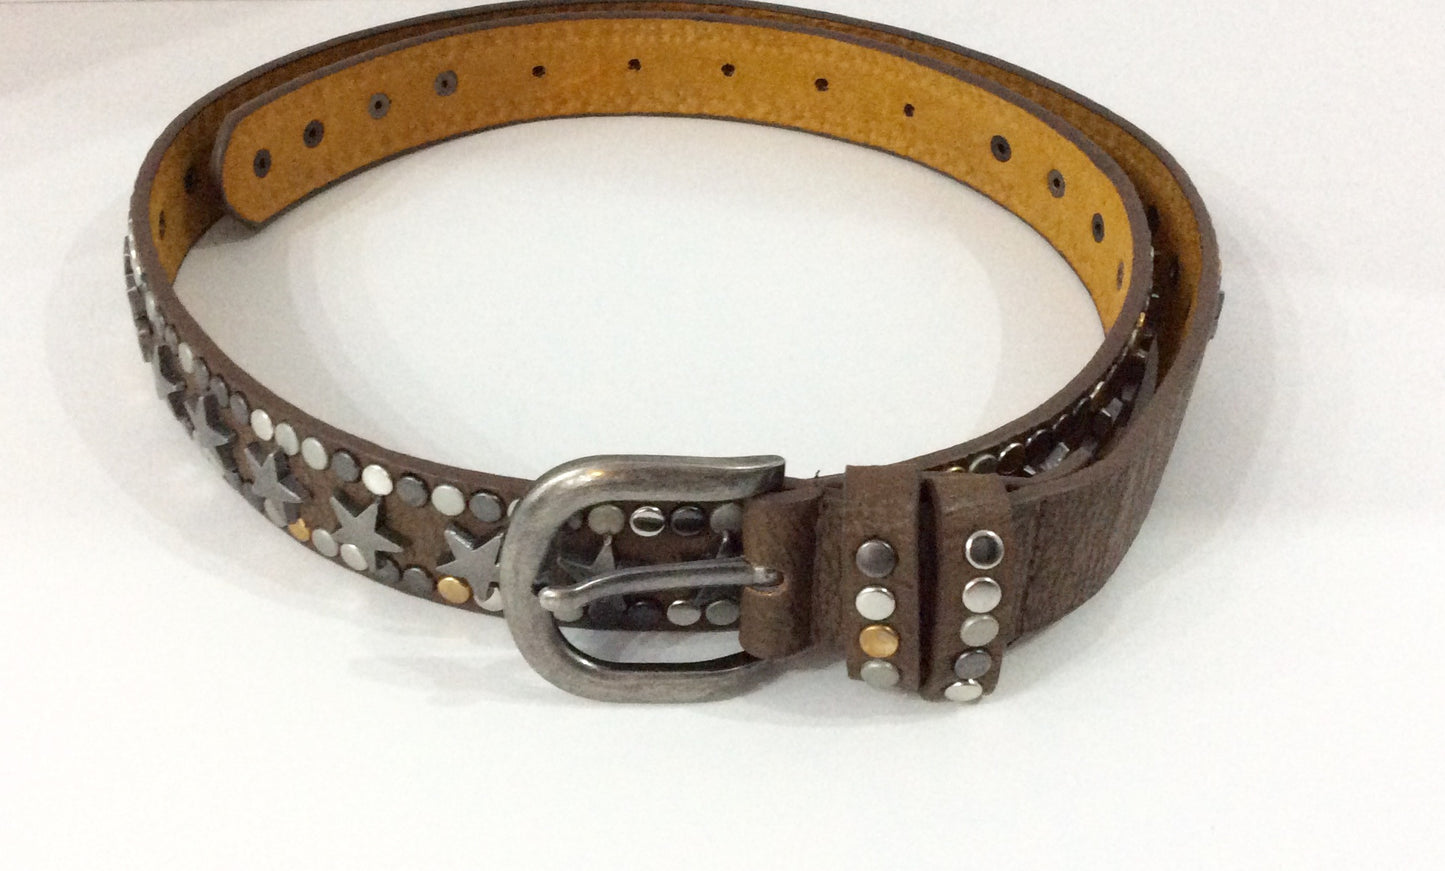 Belt-Vegan belt made in Italy with decorative studding